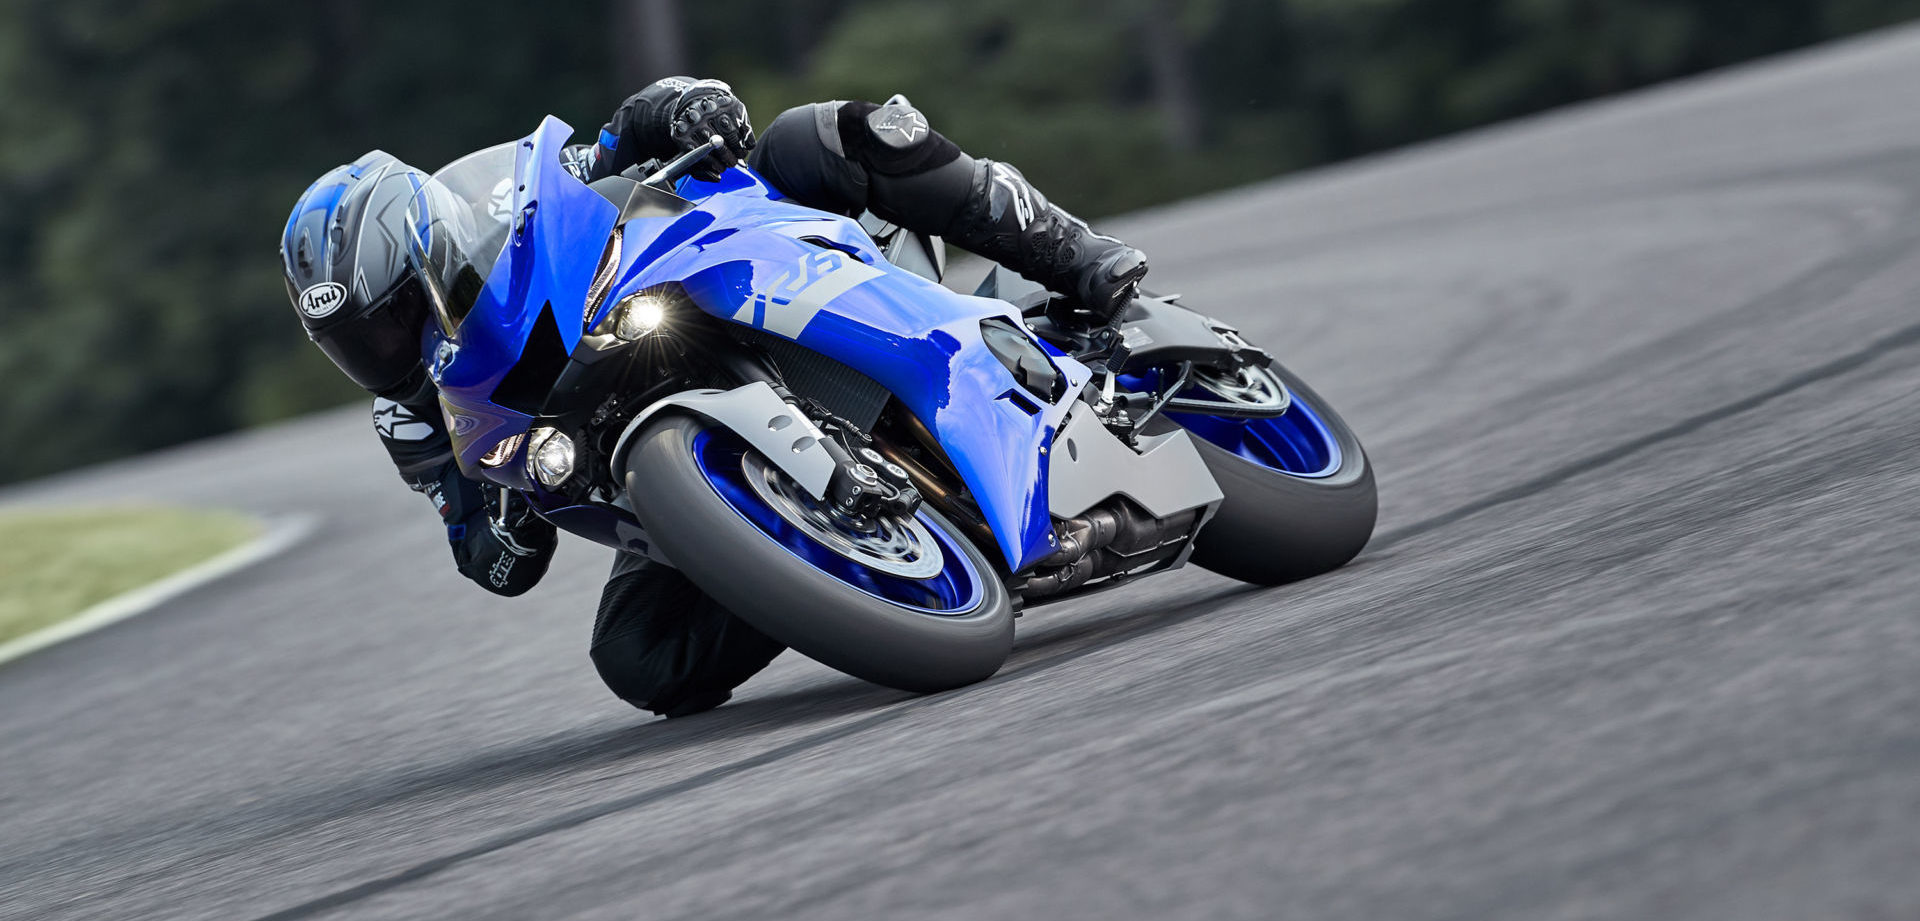 Yamaha Motor Europe Selling Yzf R6 Track Bikes Roadracing World Magazine Motorcycle Riding Racing Tech News